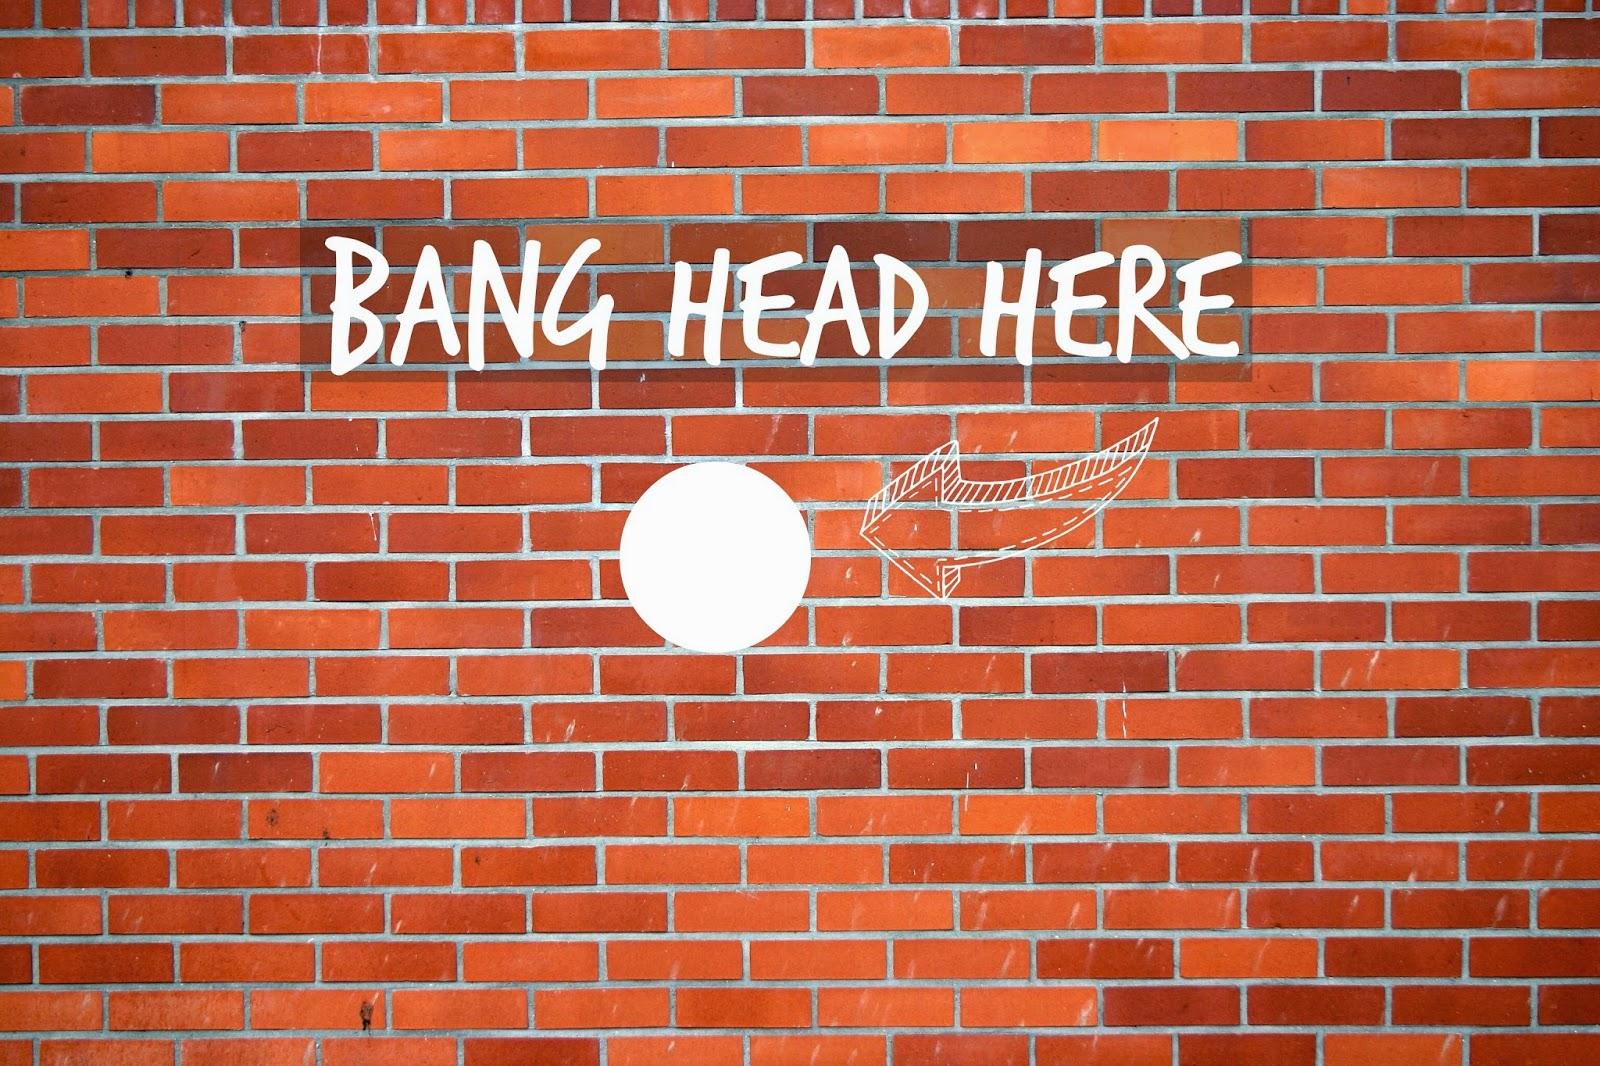 bang-head-against-brick-wall.jpg